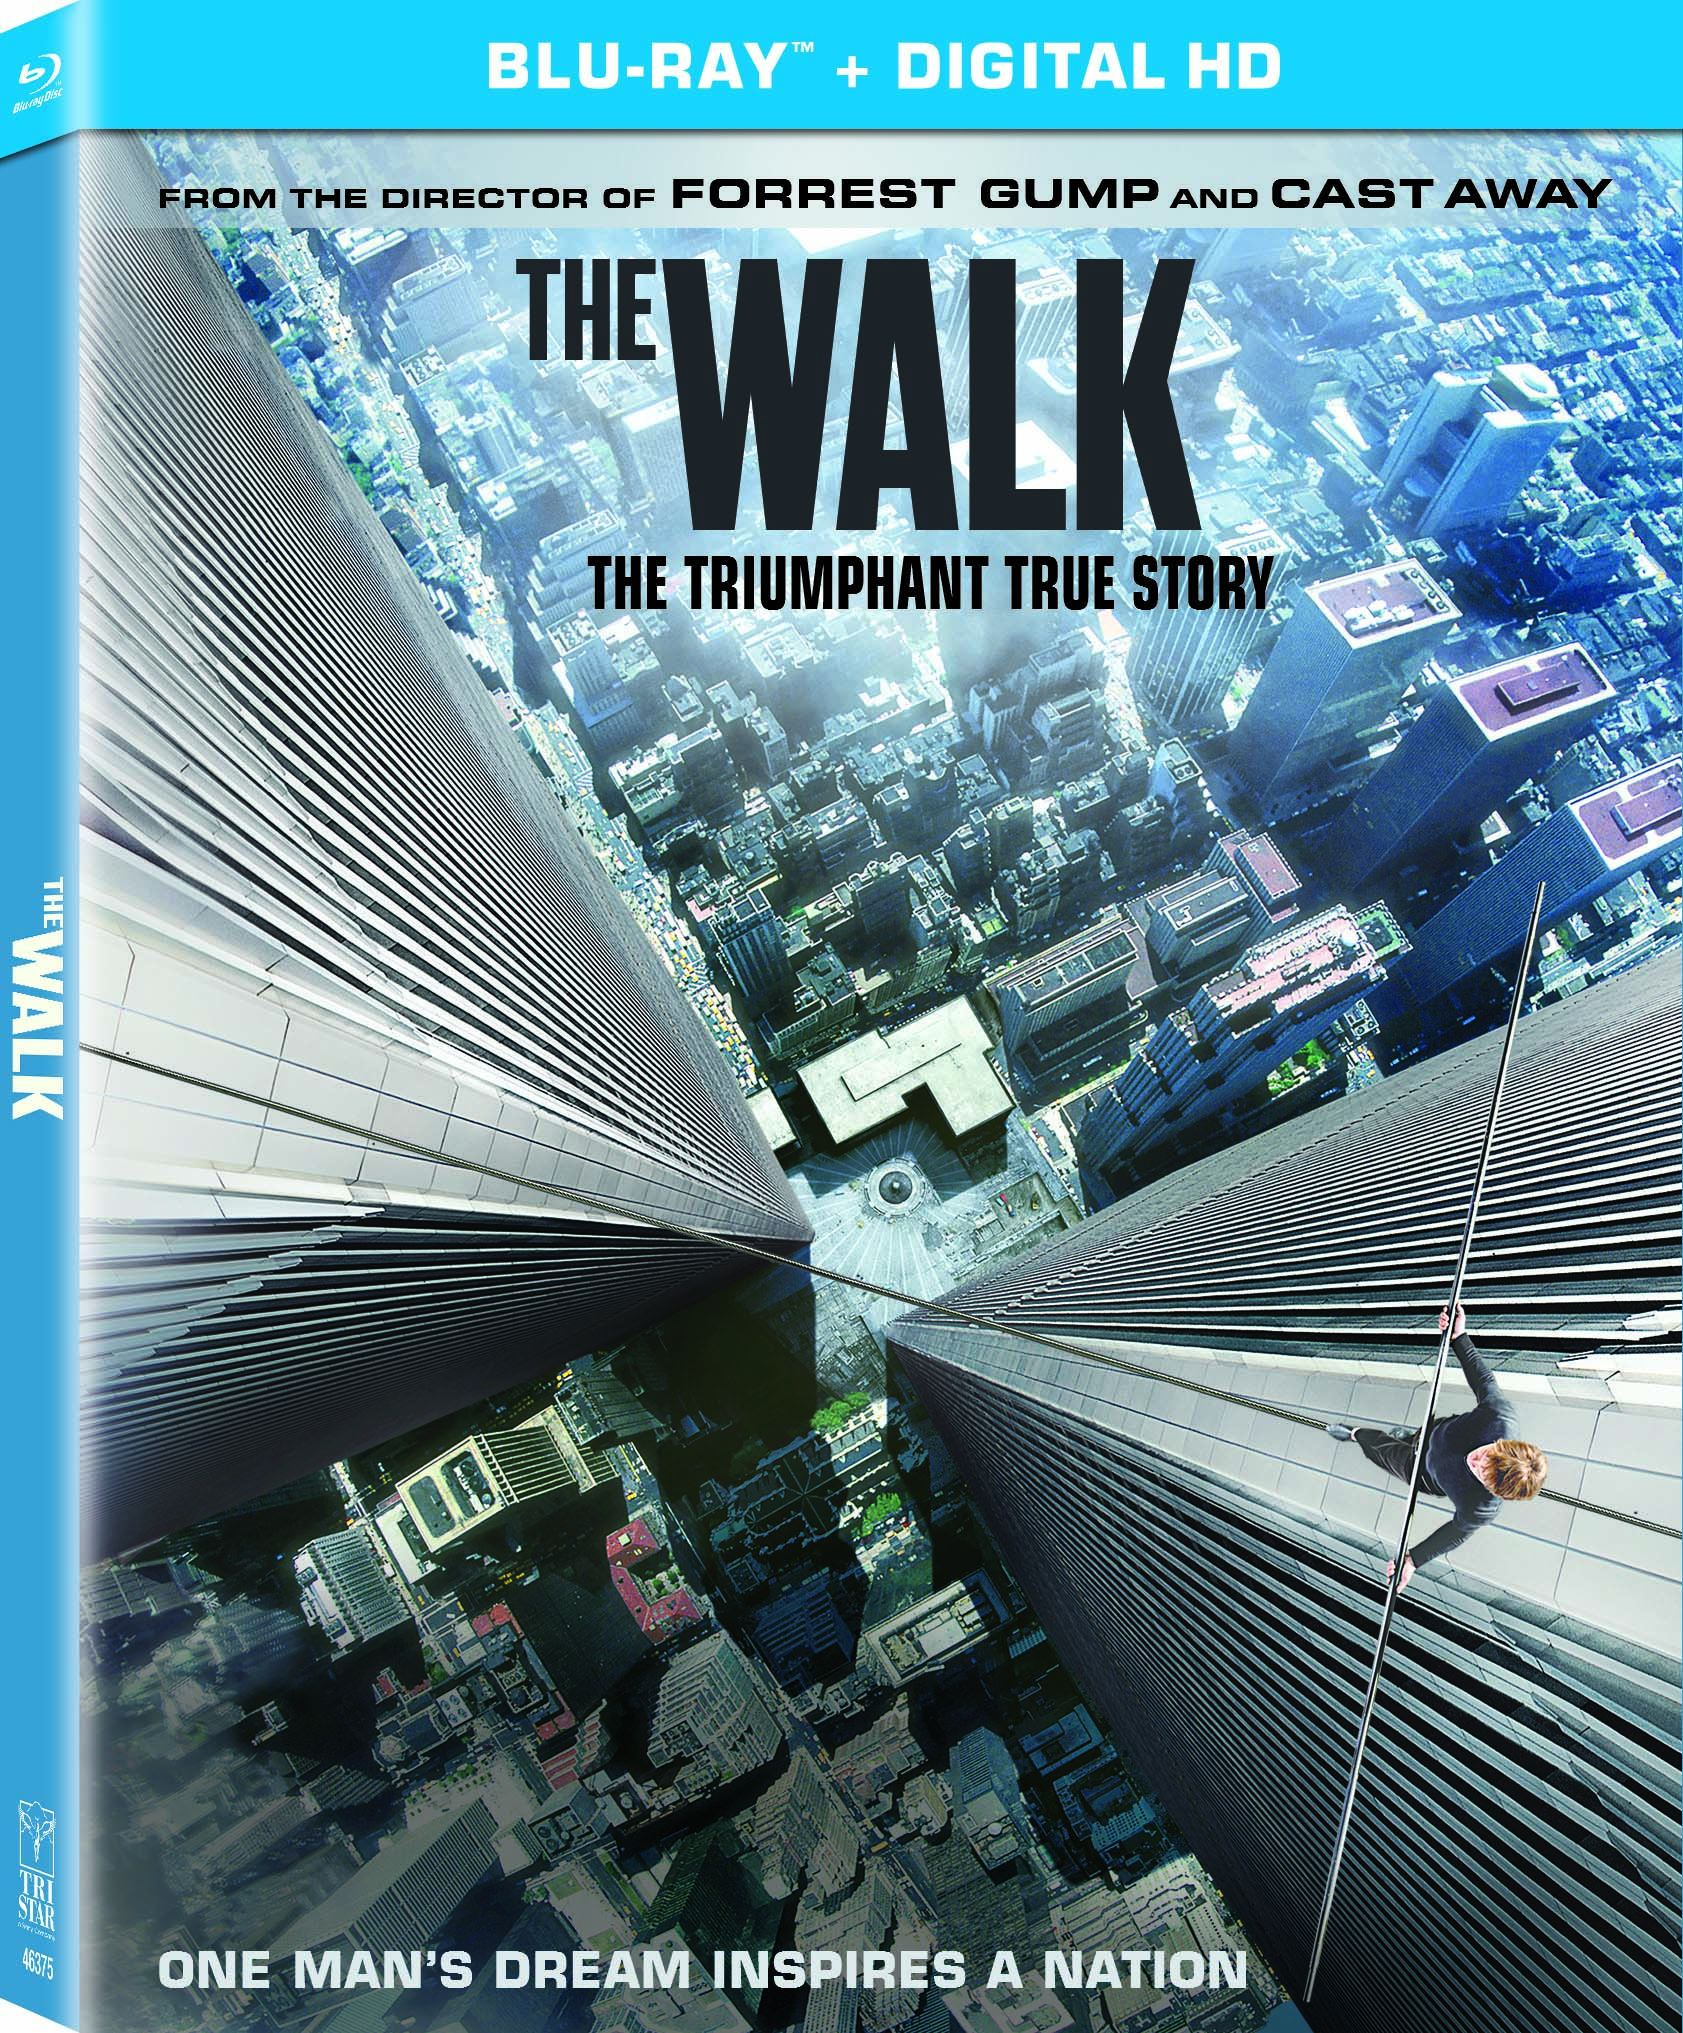 Exclusive: Robert Zemeckis' 'The Walk' Hitting Digital HD and Blu ...